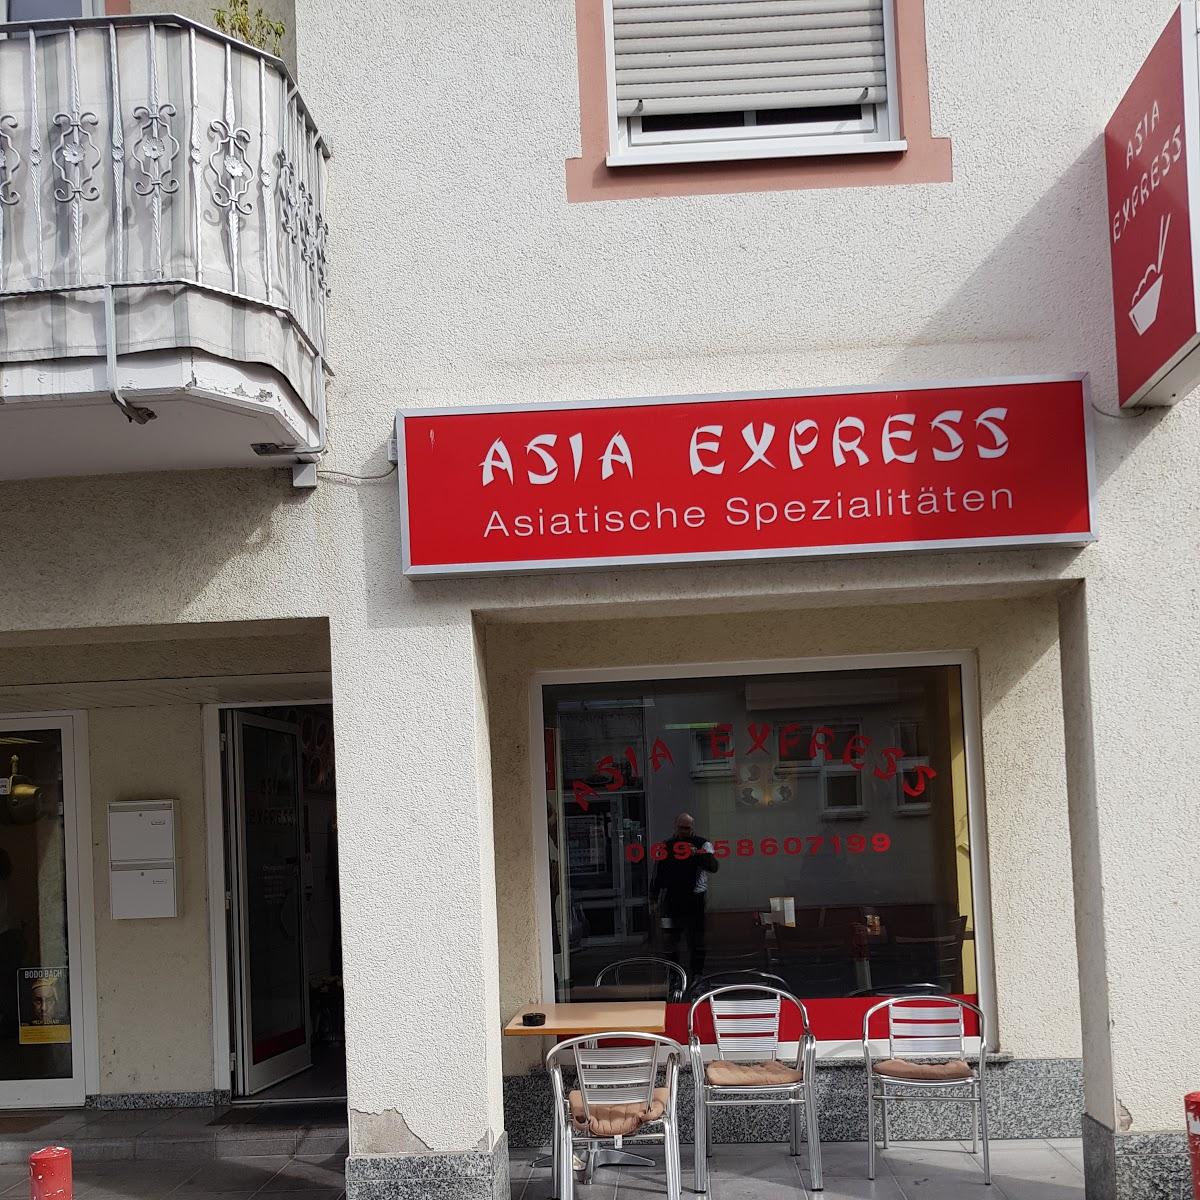 Restaurant "Asia Express" in Frankfurt am Main